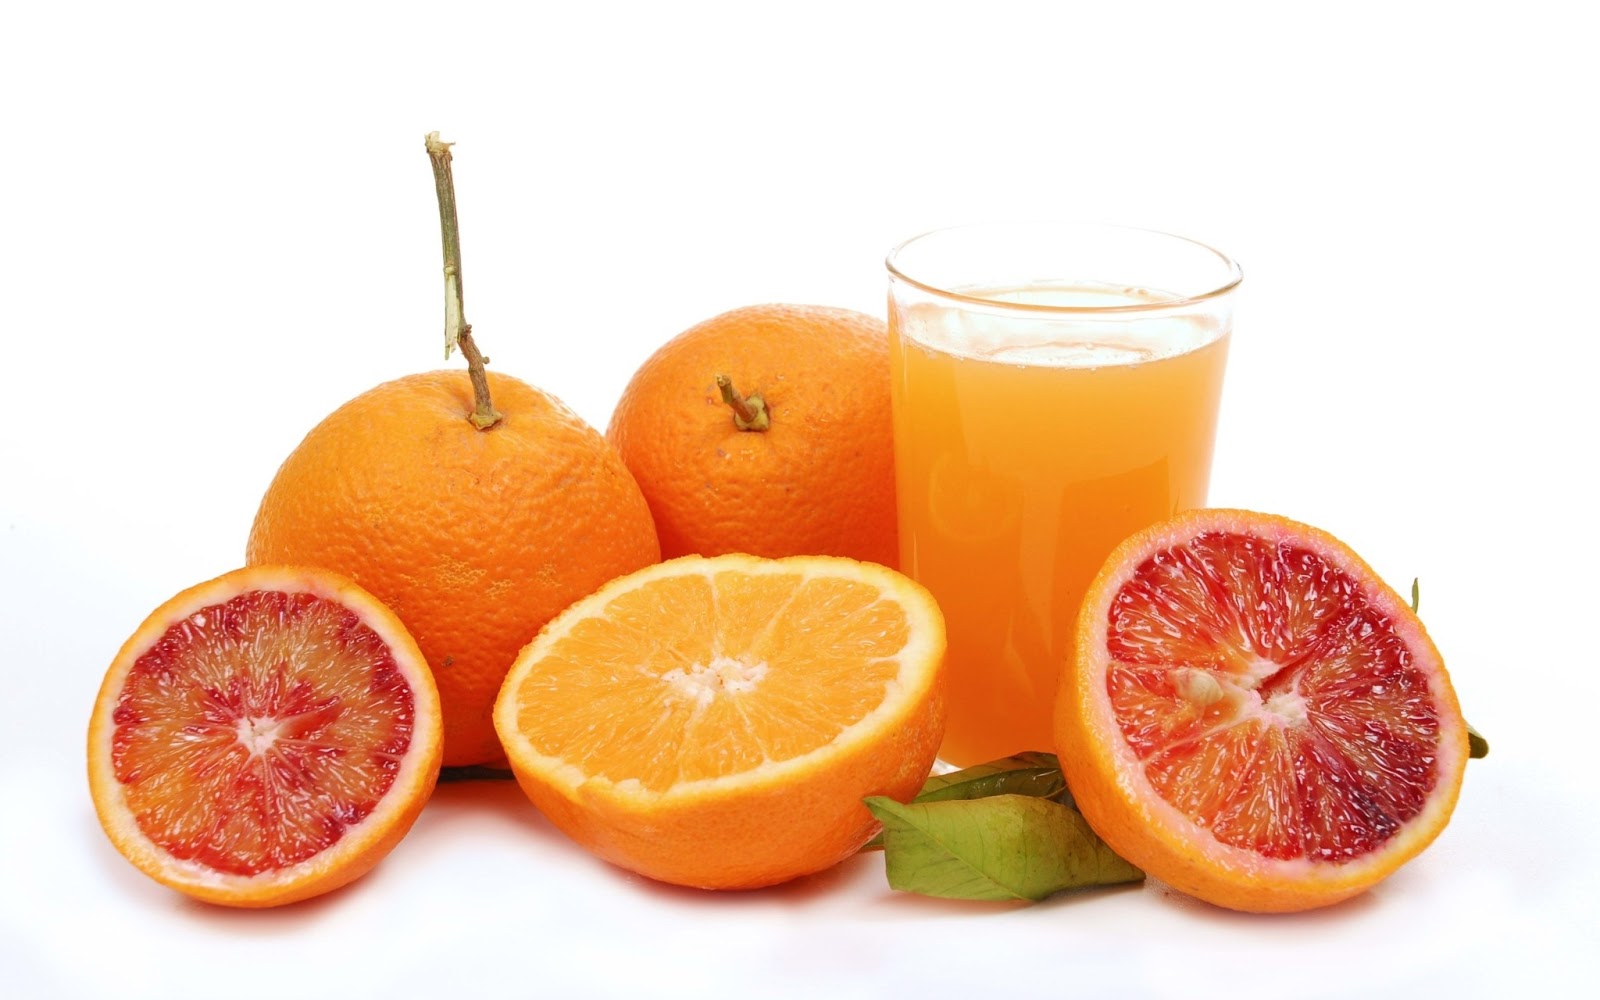 http://4.bp.blogspot.com/-C2-f_fZP8Vw/UPQchxdUxgI/AAAAAAAABUc/cs15UOyxr6U/s1600/Juice+of+Grapefruit+and+Oranges.jpg